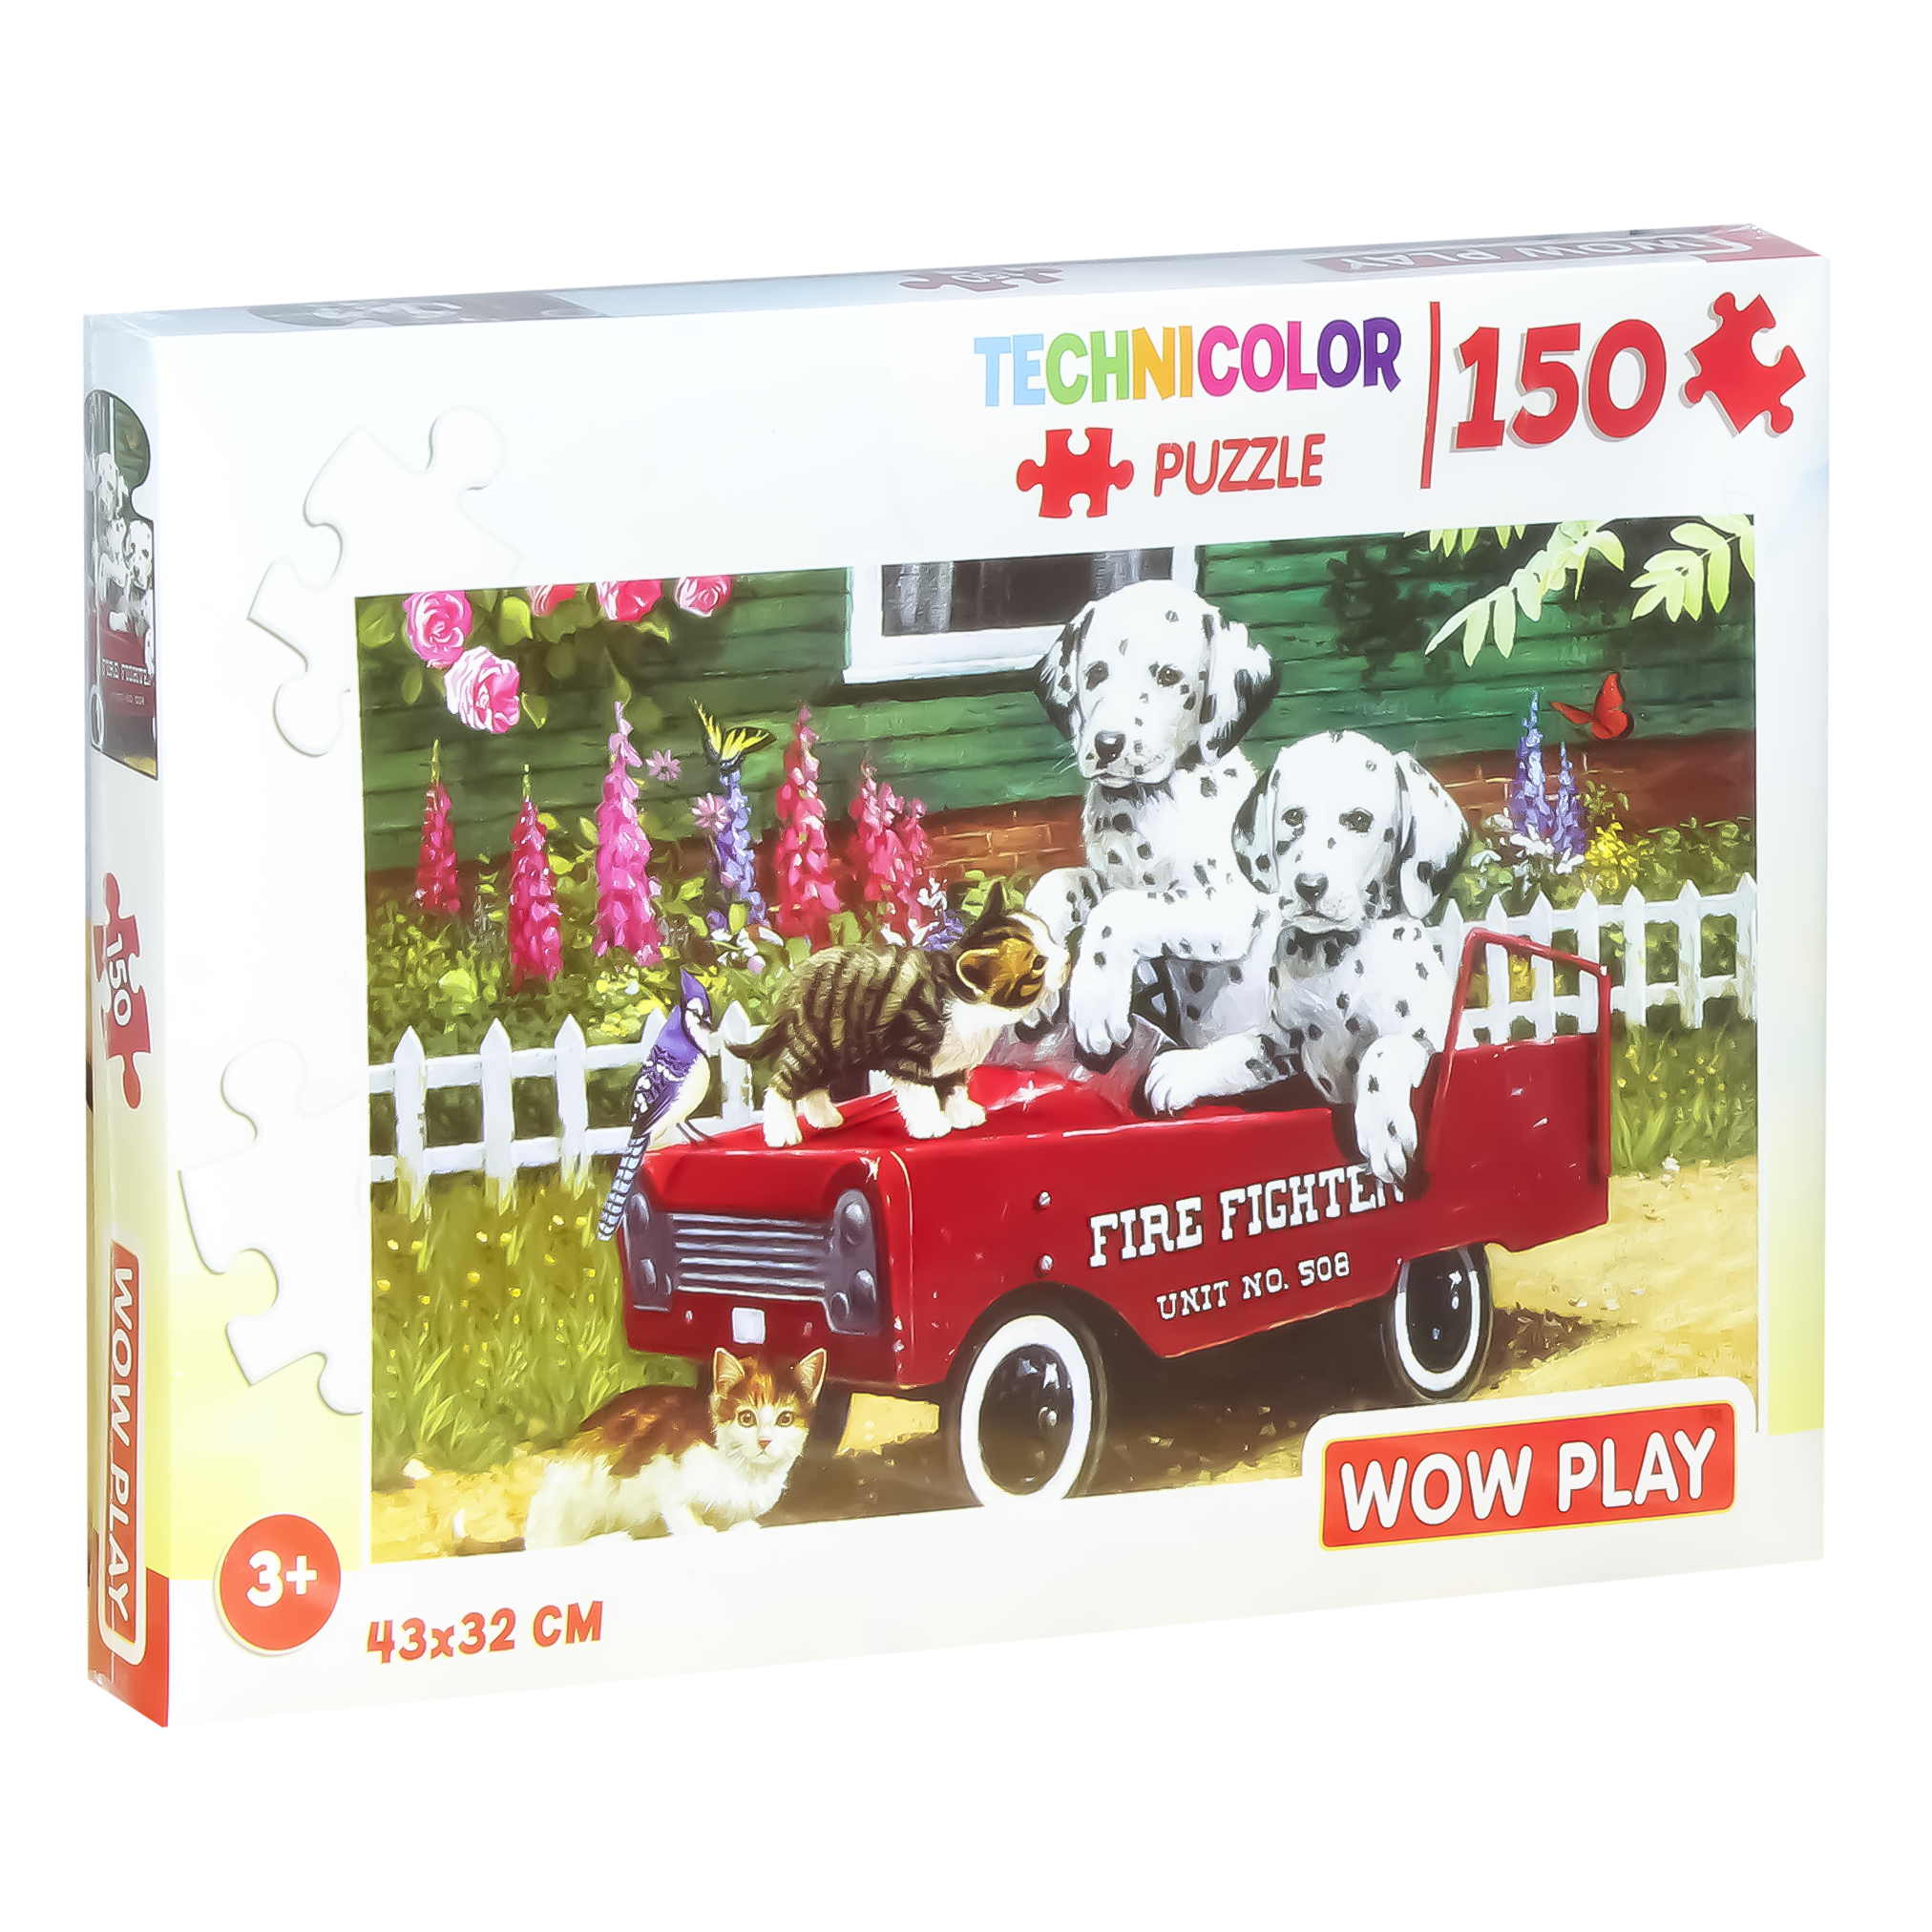 Wow Play Technicolour Puzzle 150 pieces 